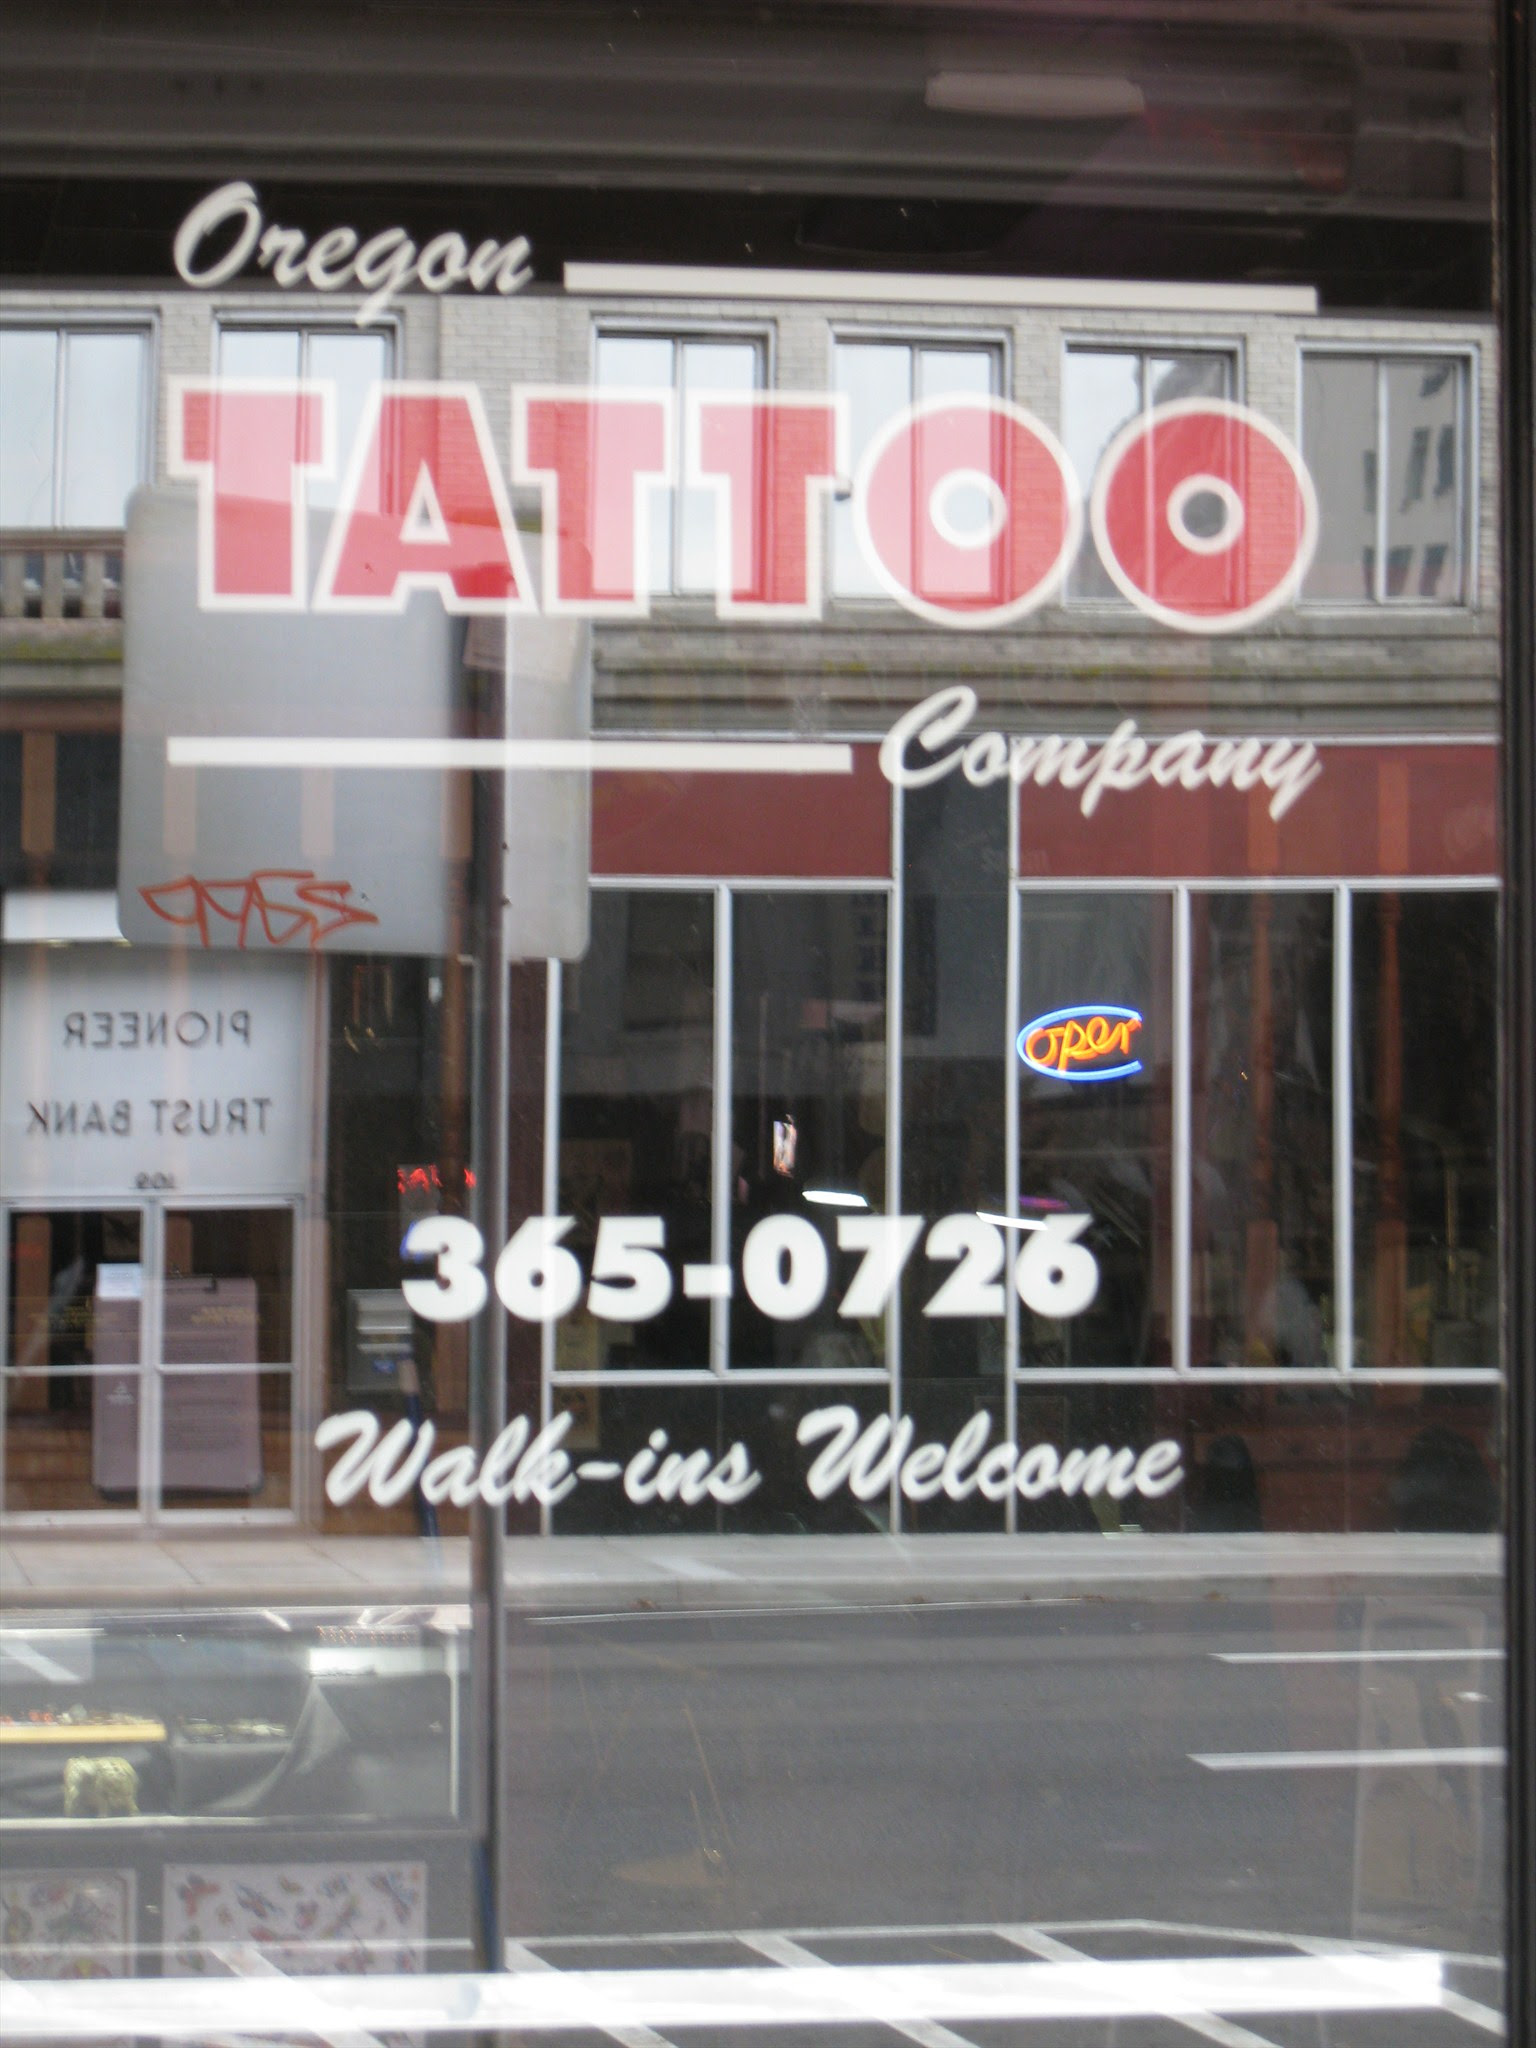 Tattoo Shops That Do Walk Ins